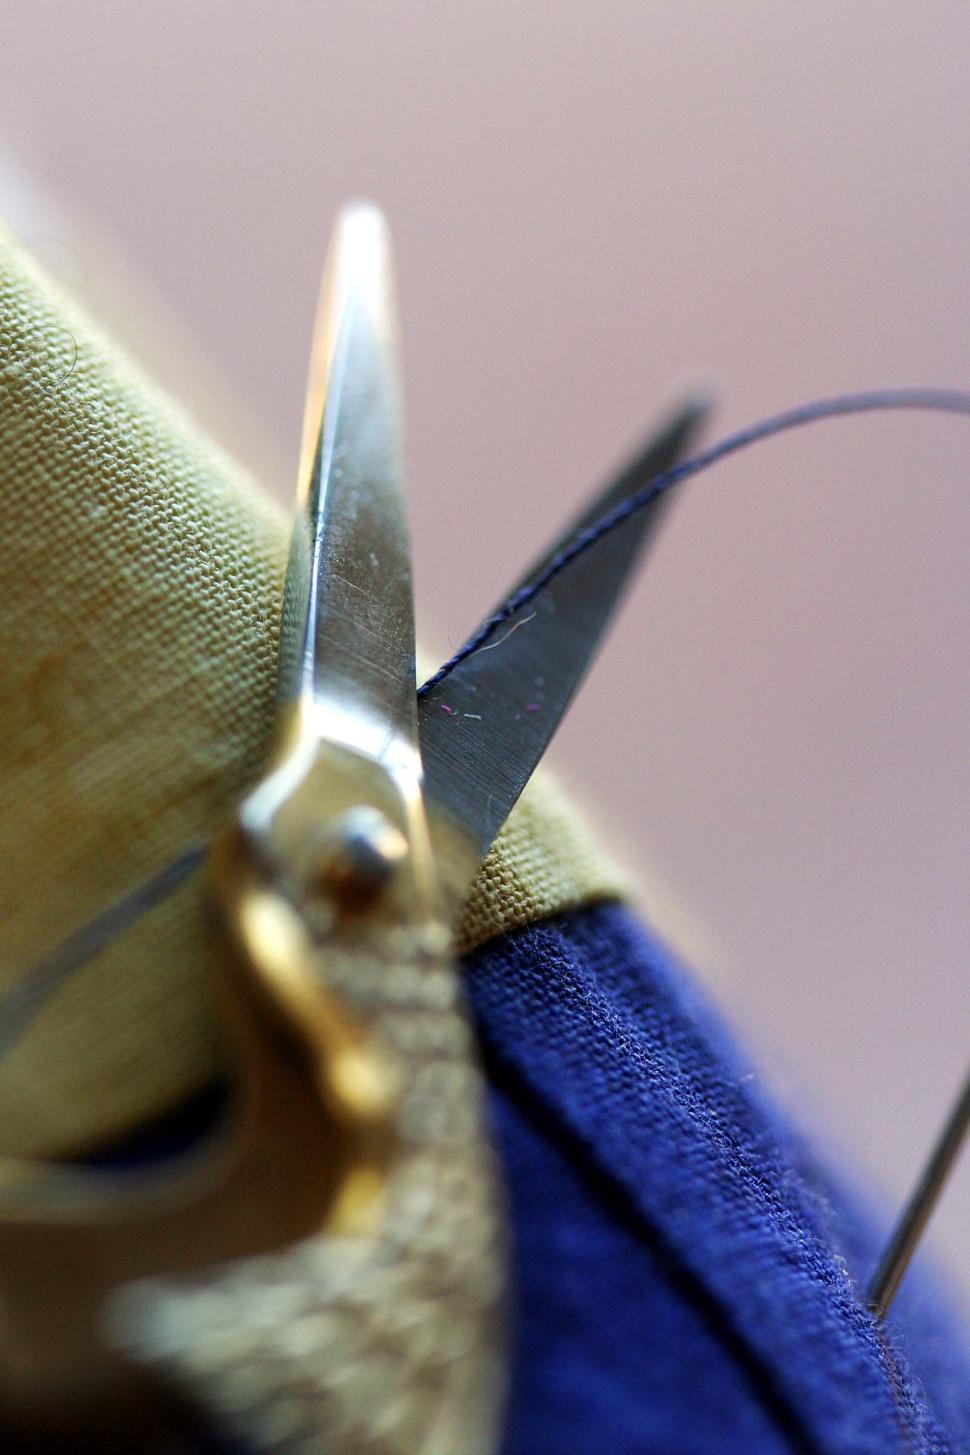 Free Image of Scissors Cutting Cloth Close Up 